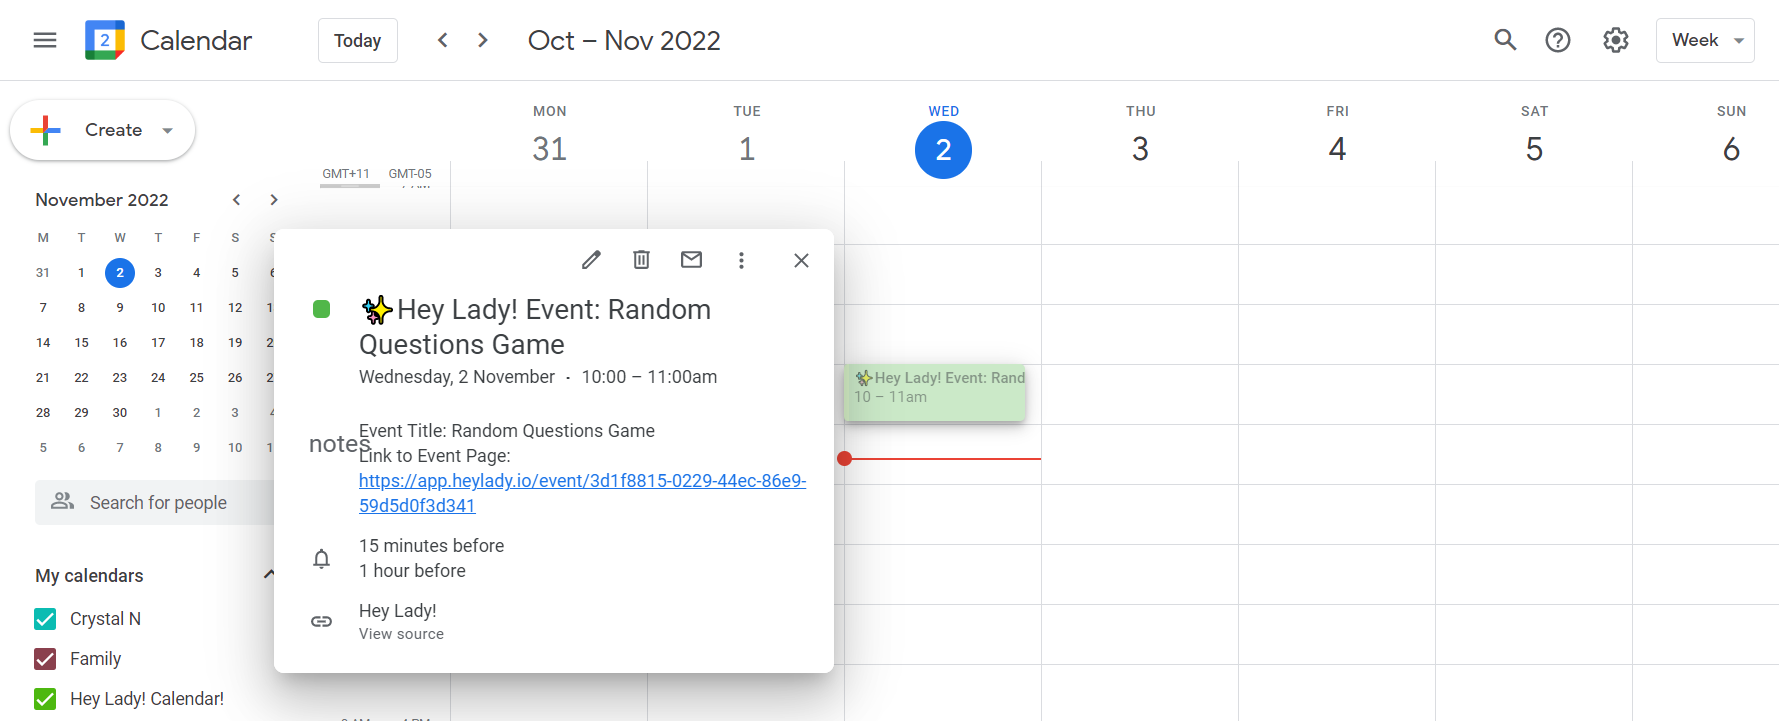 How do I add events to my Google Calendar?